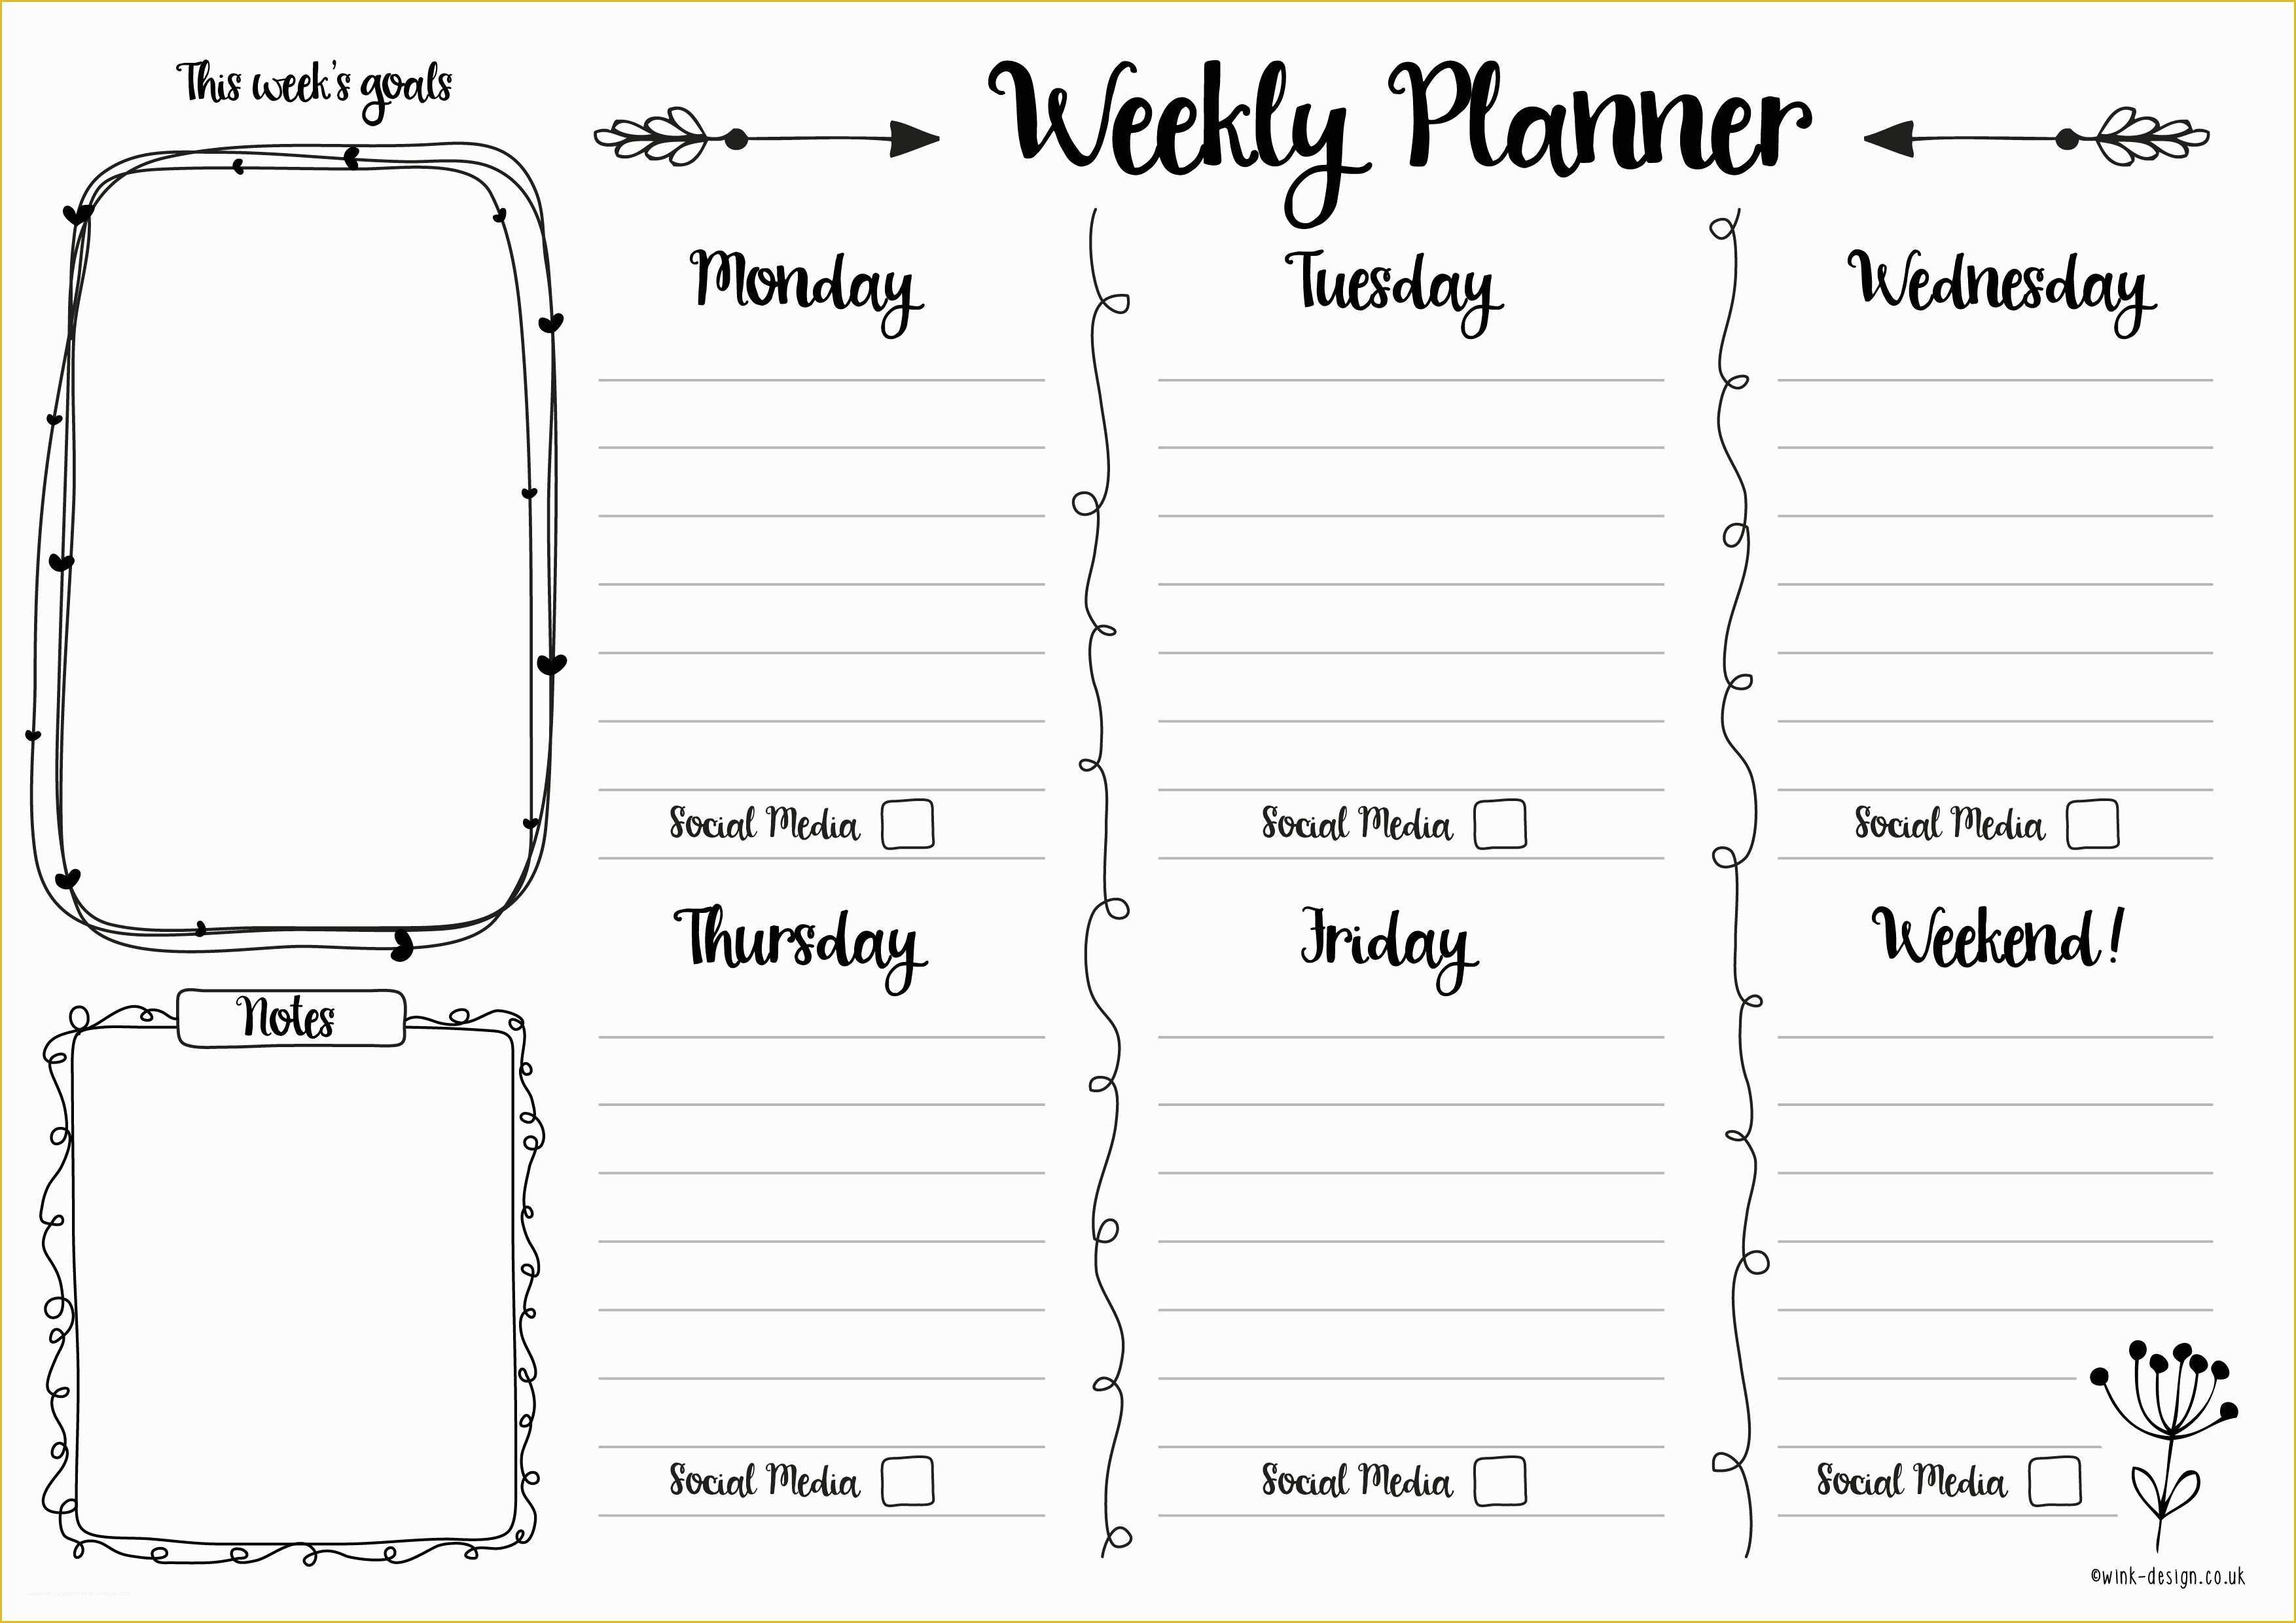 Free Online Weekly Planner Template Of Free Printable Weekly Planner Uma Printable